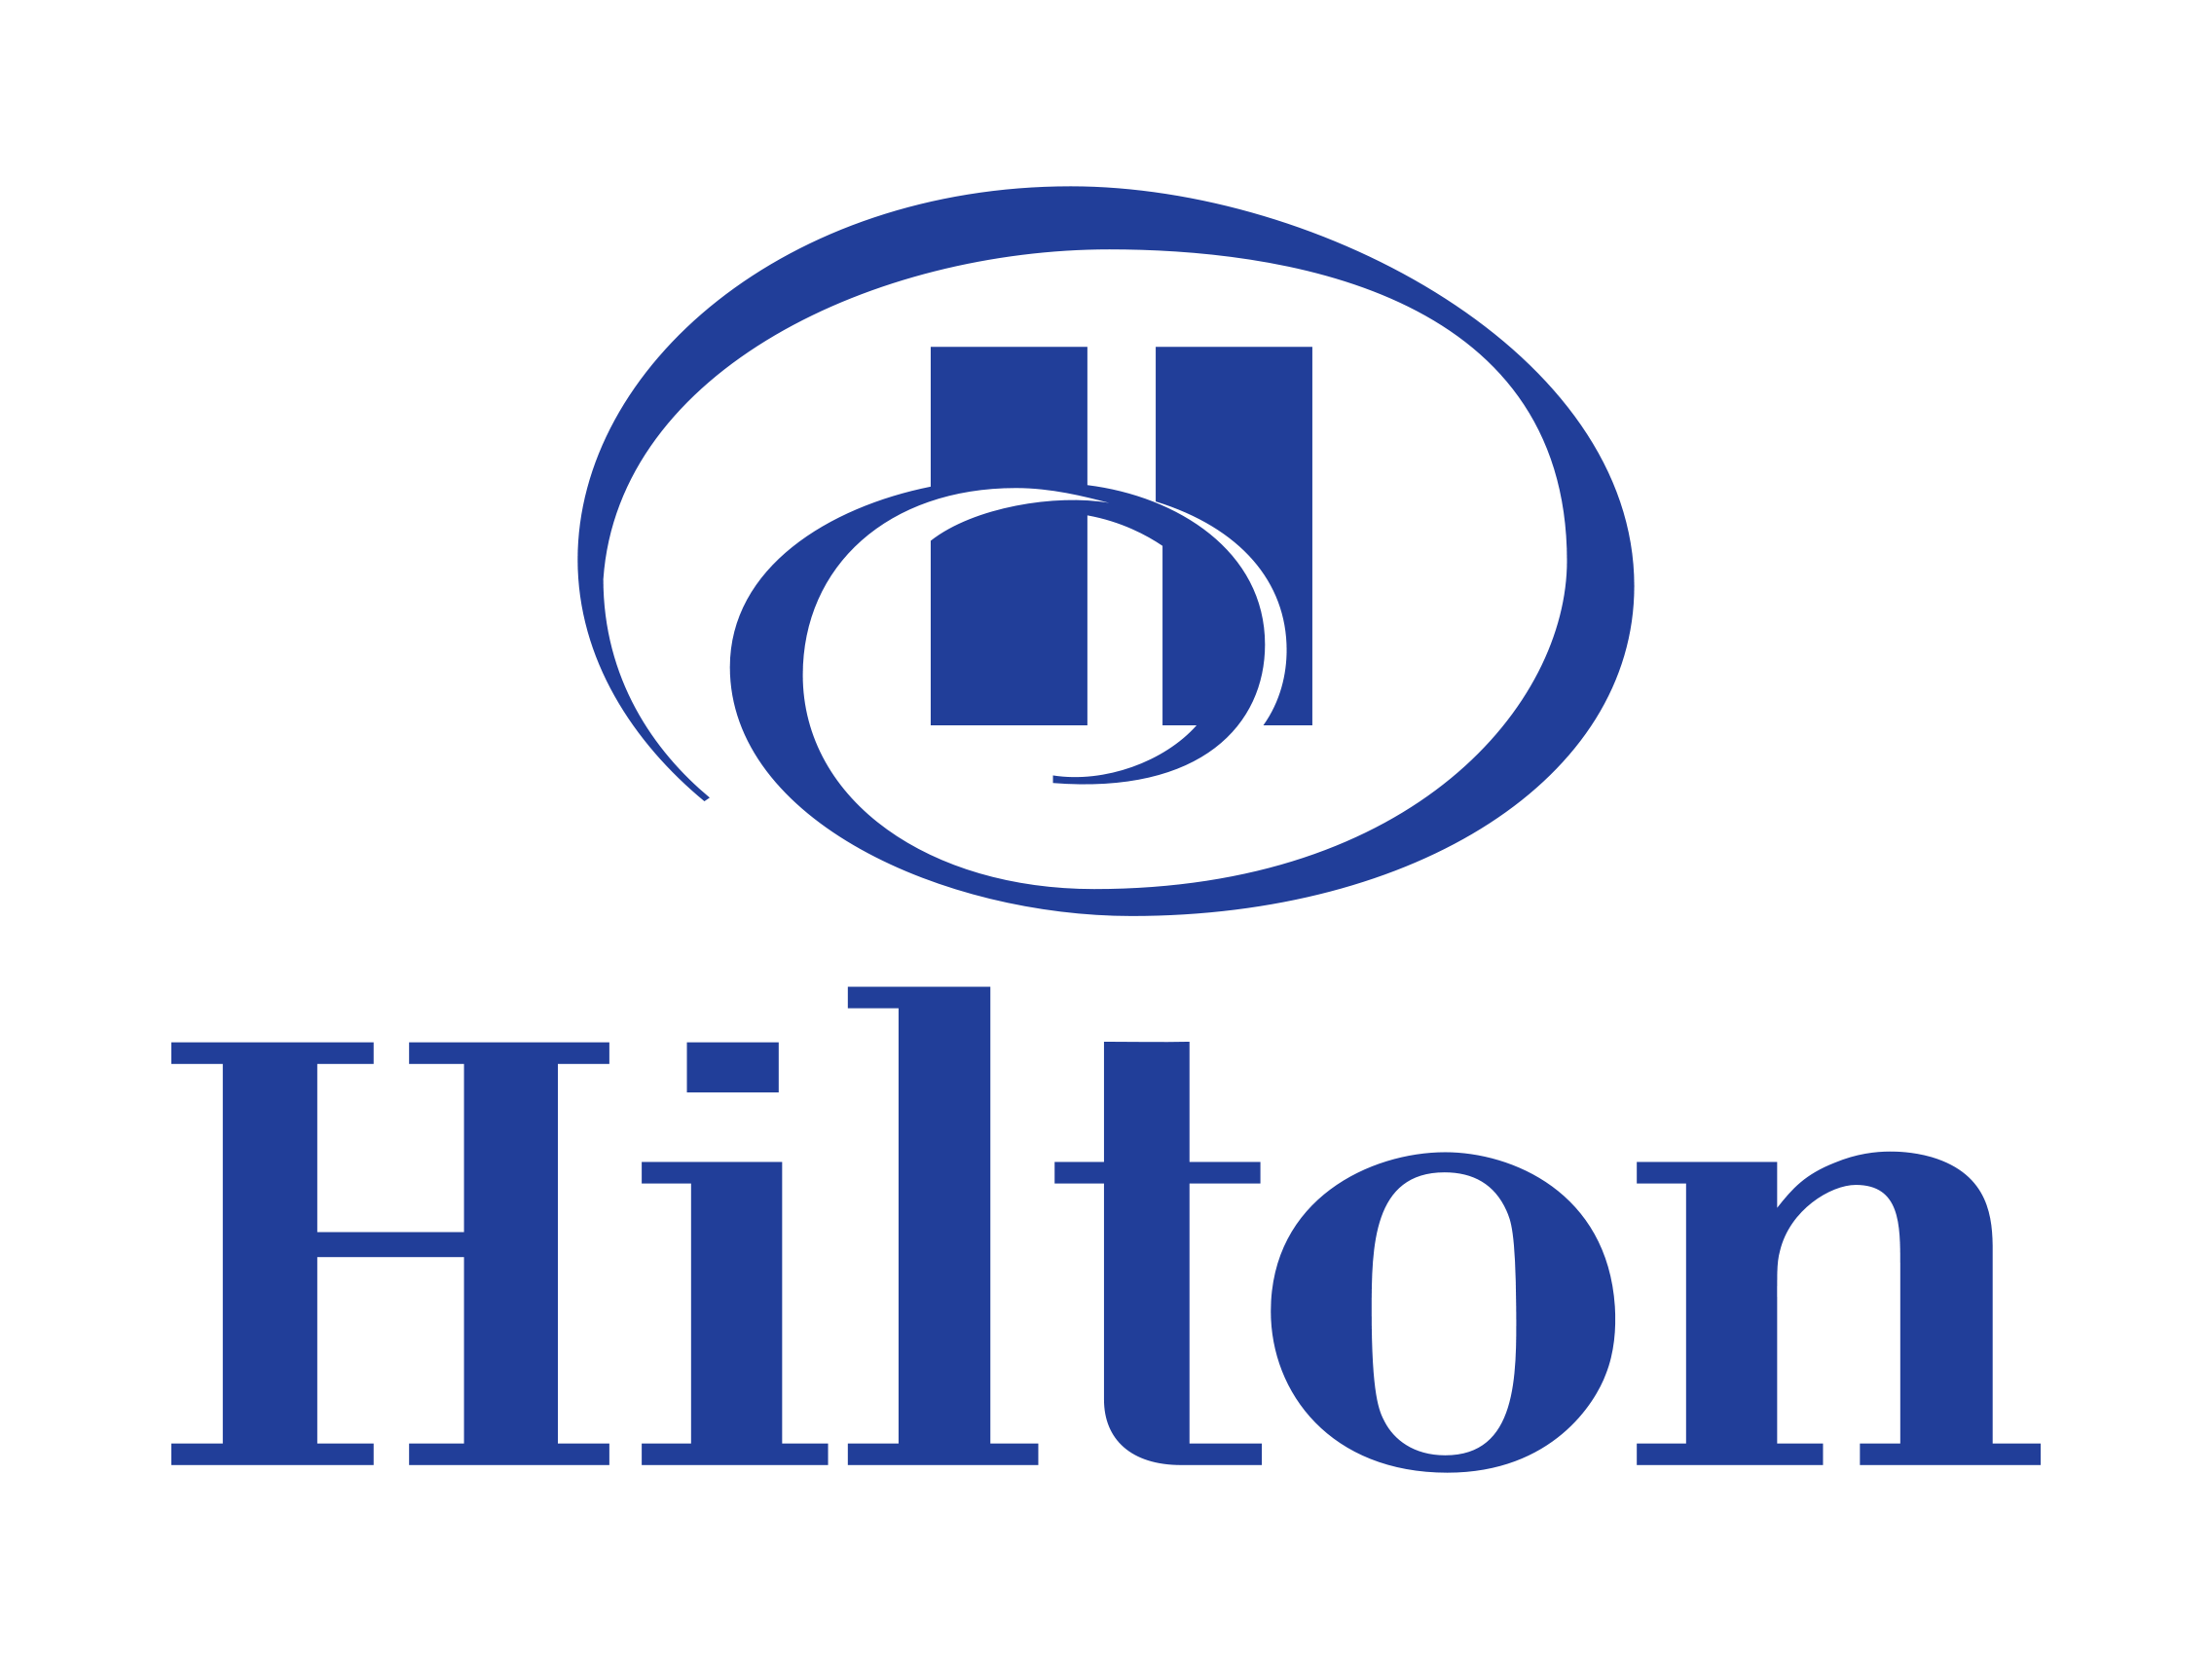 Hilton Logo Background PNG